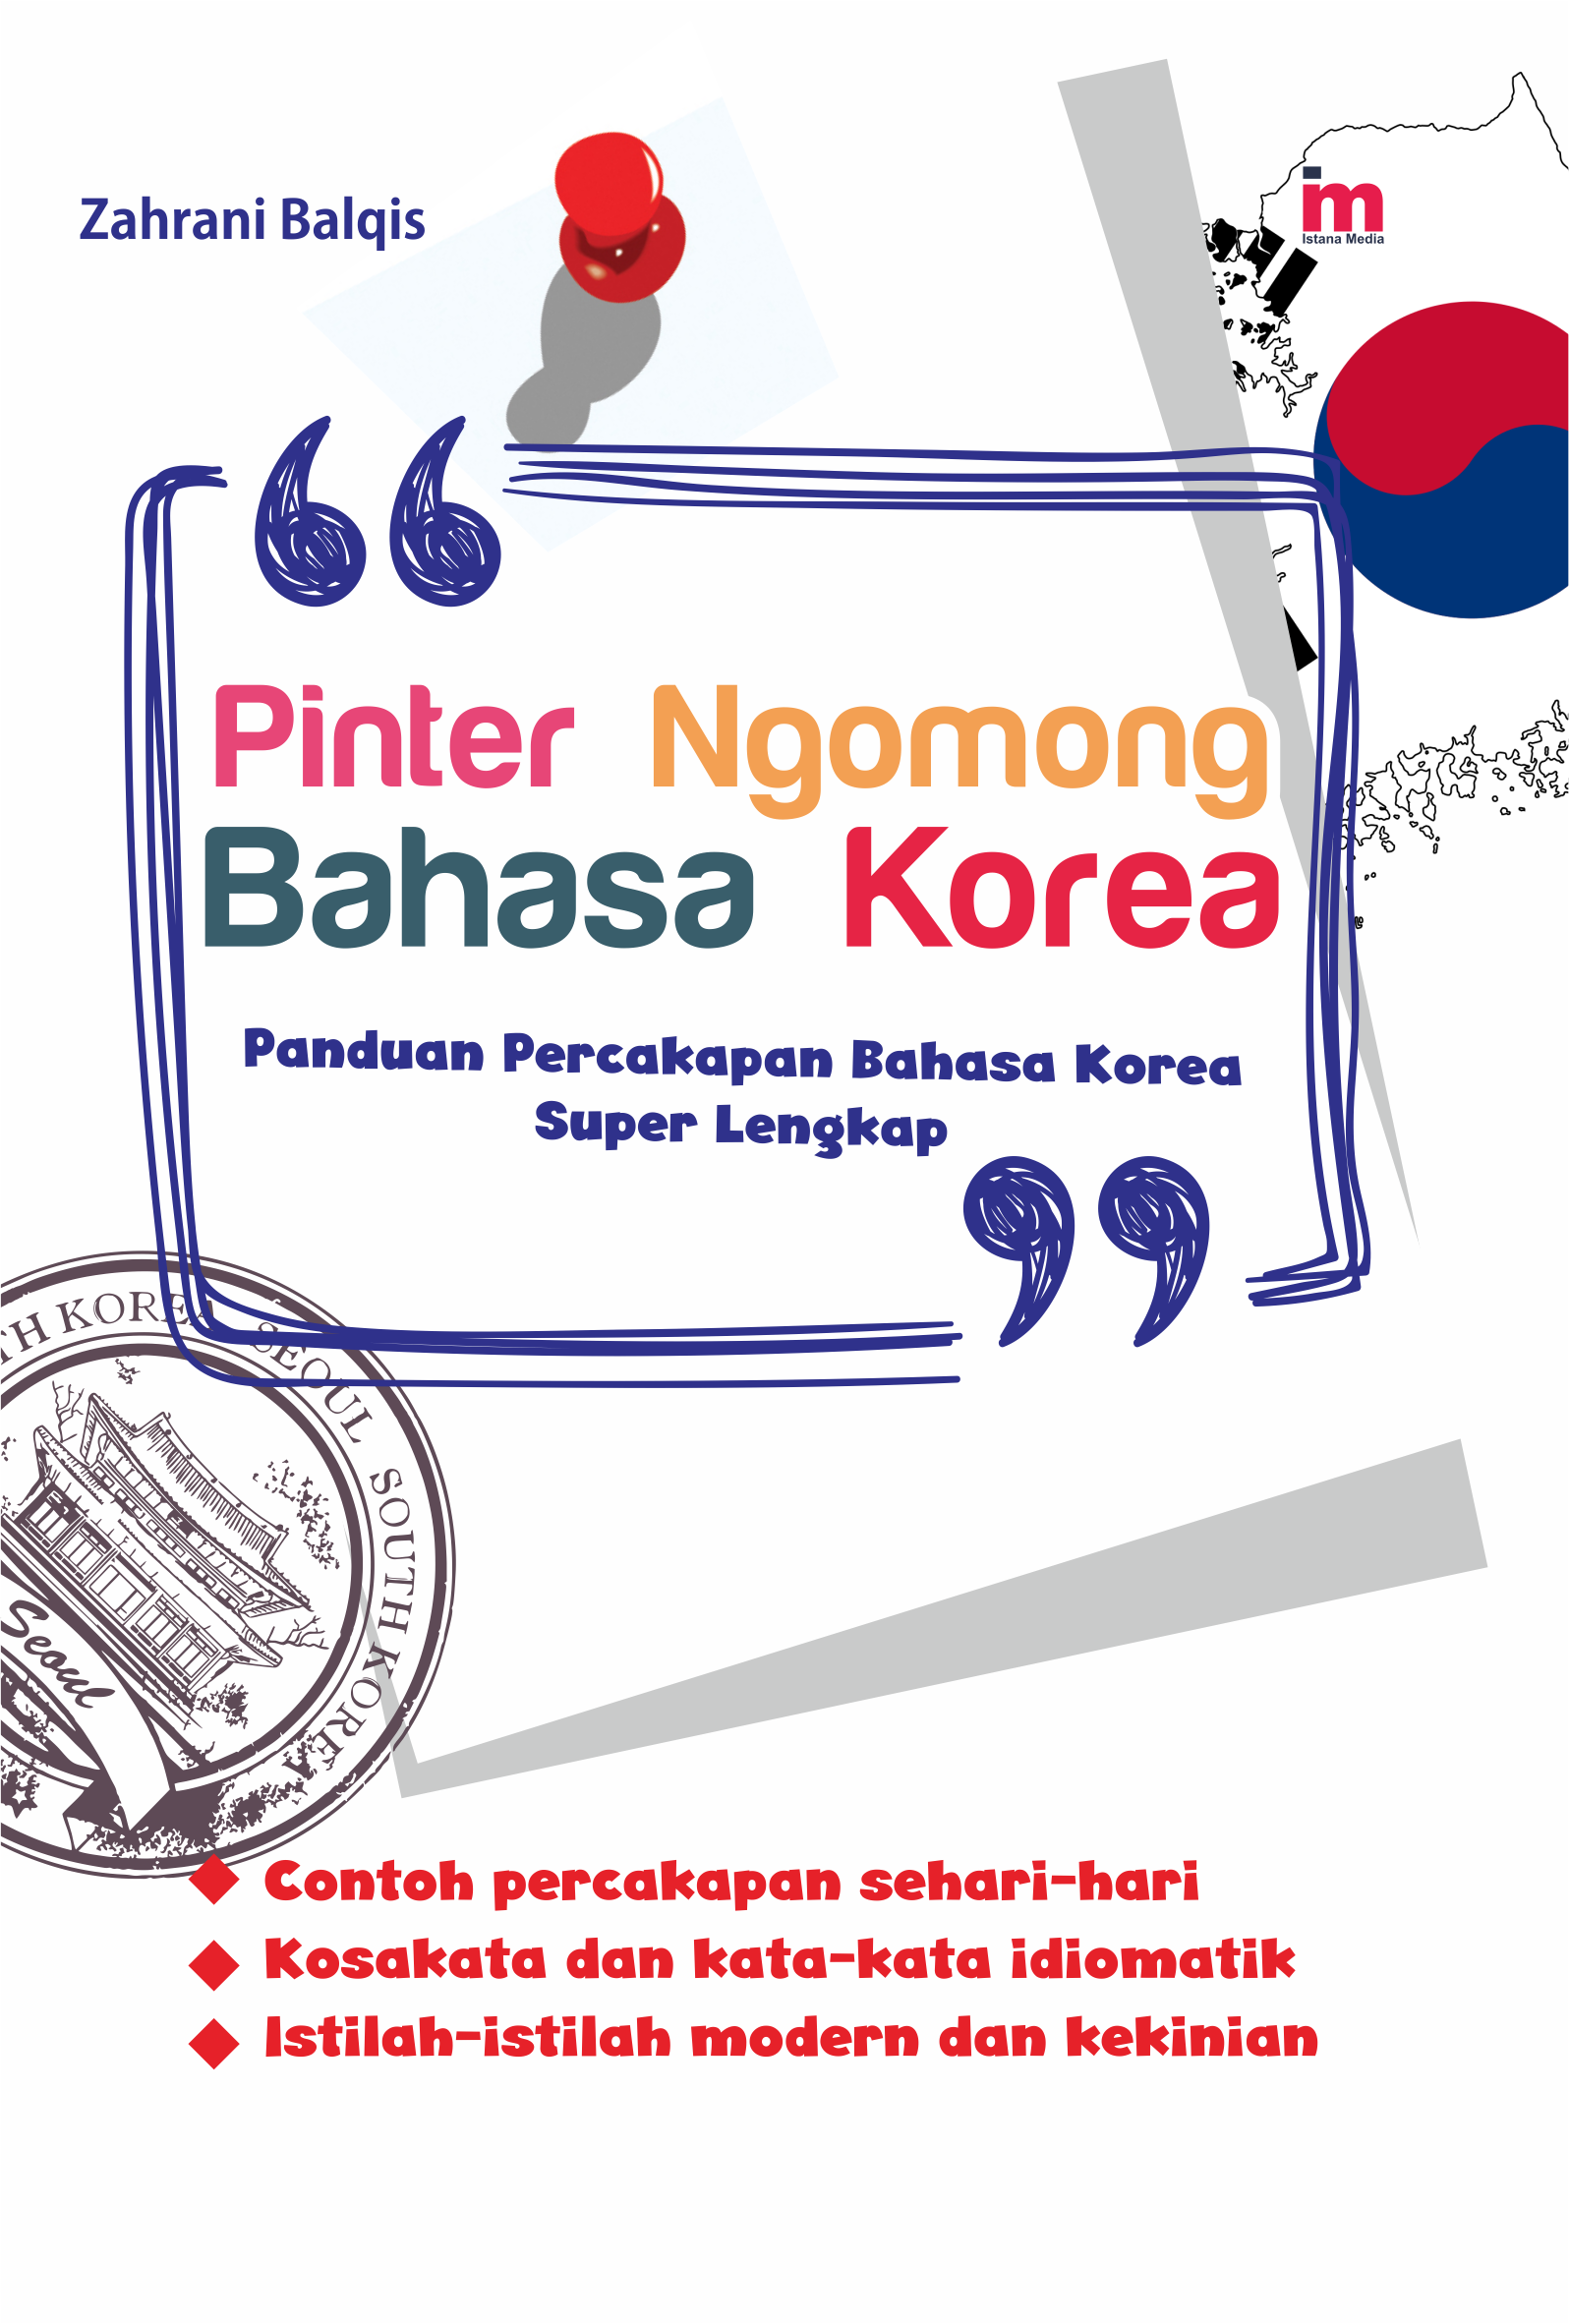 cover/(01-12-2019)pinter-ngomong-bahasa-korea.png